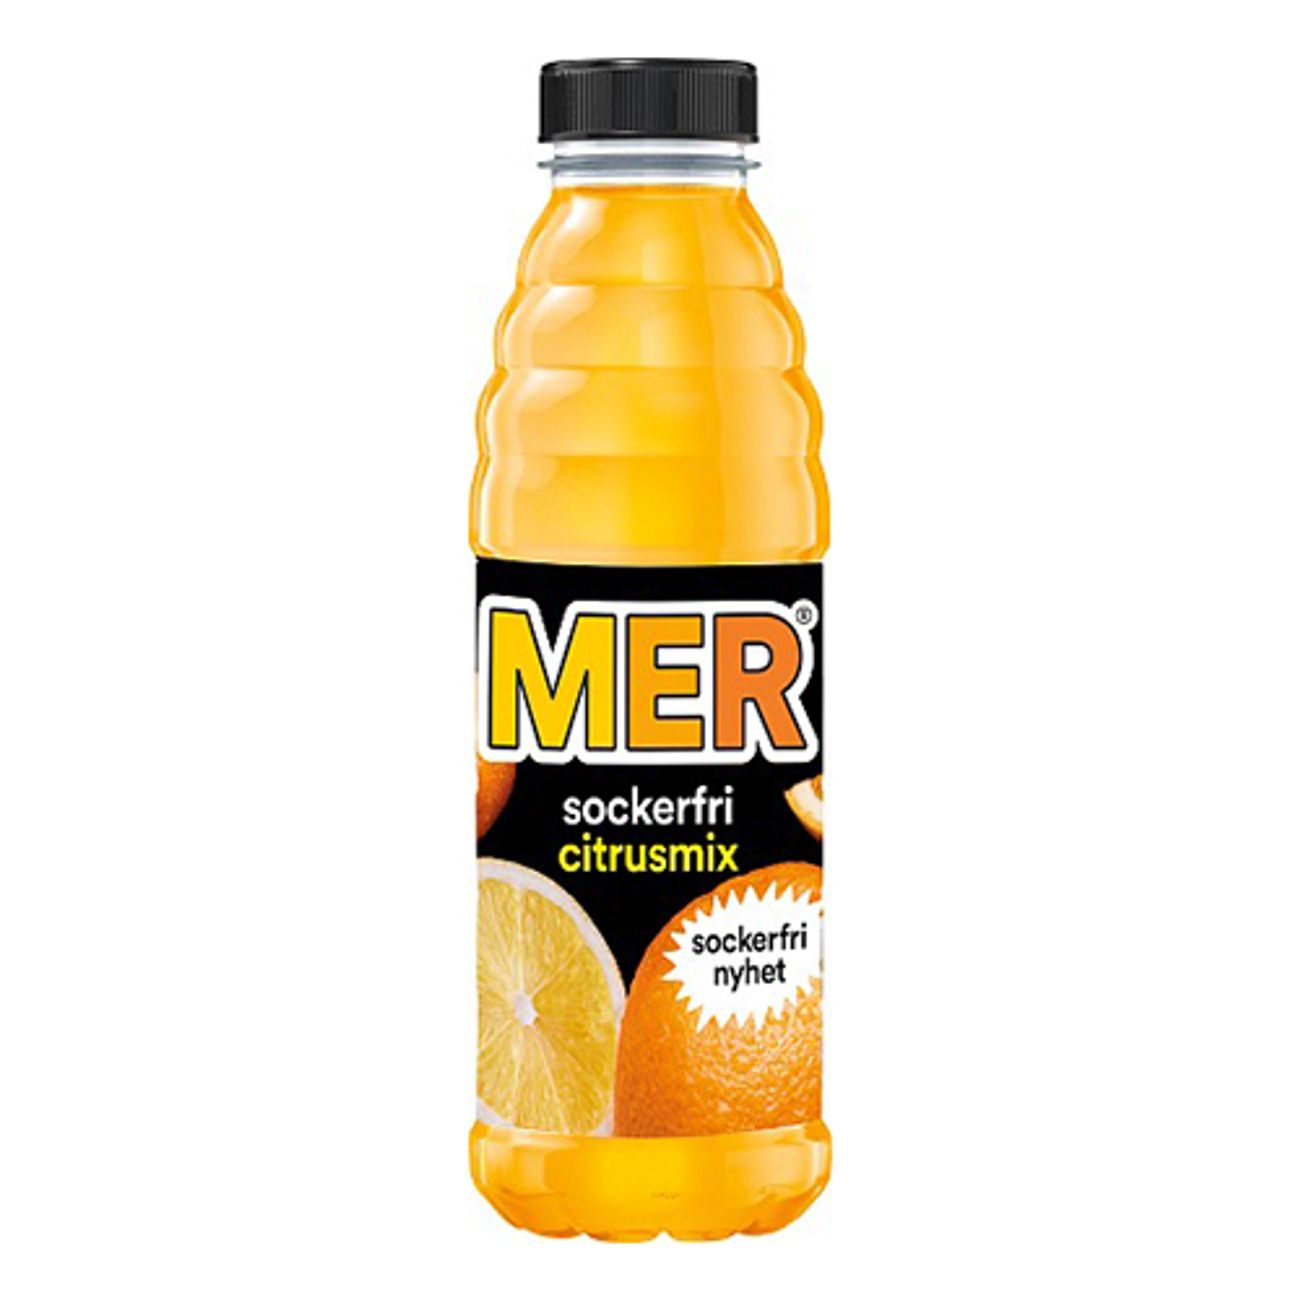 mer-sockerfri-citrusmix-1